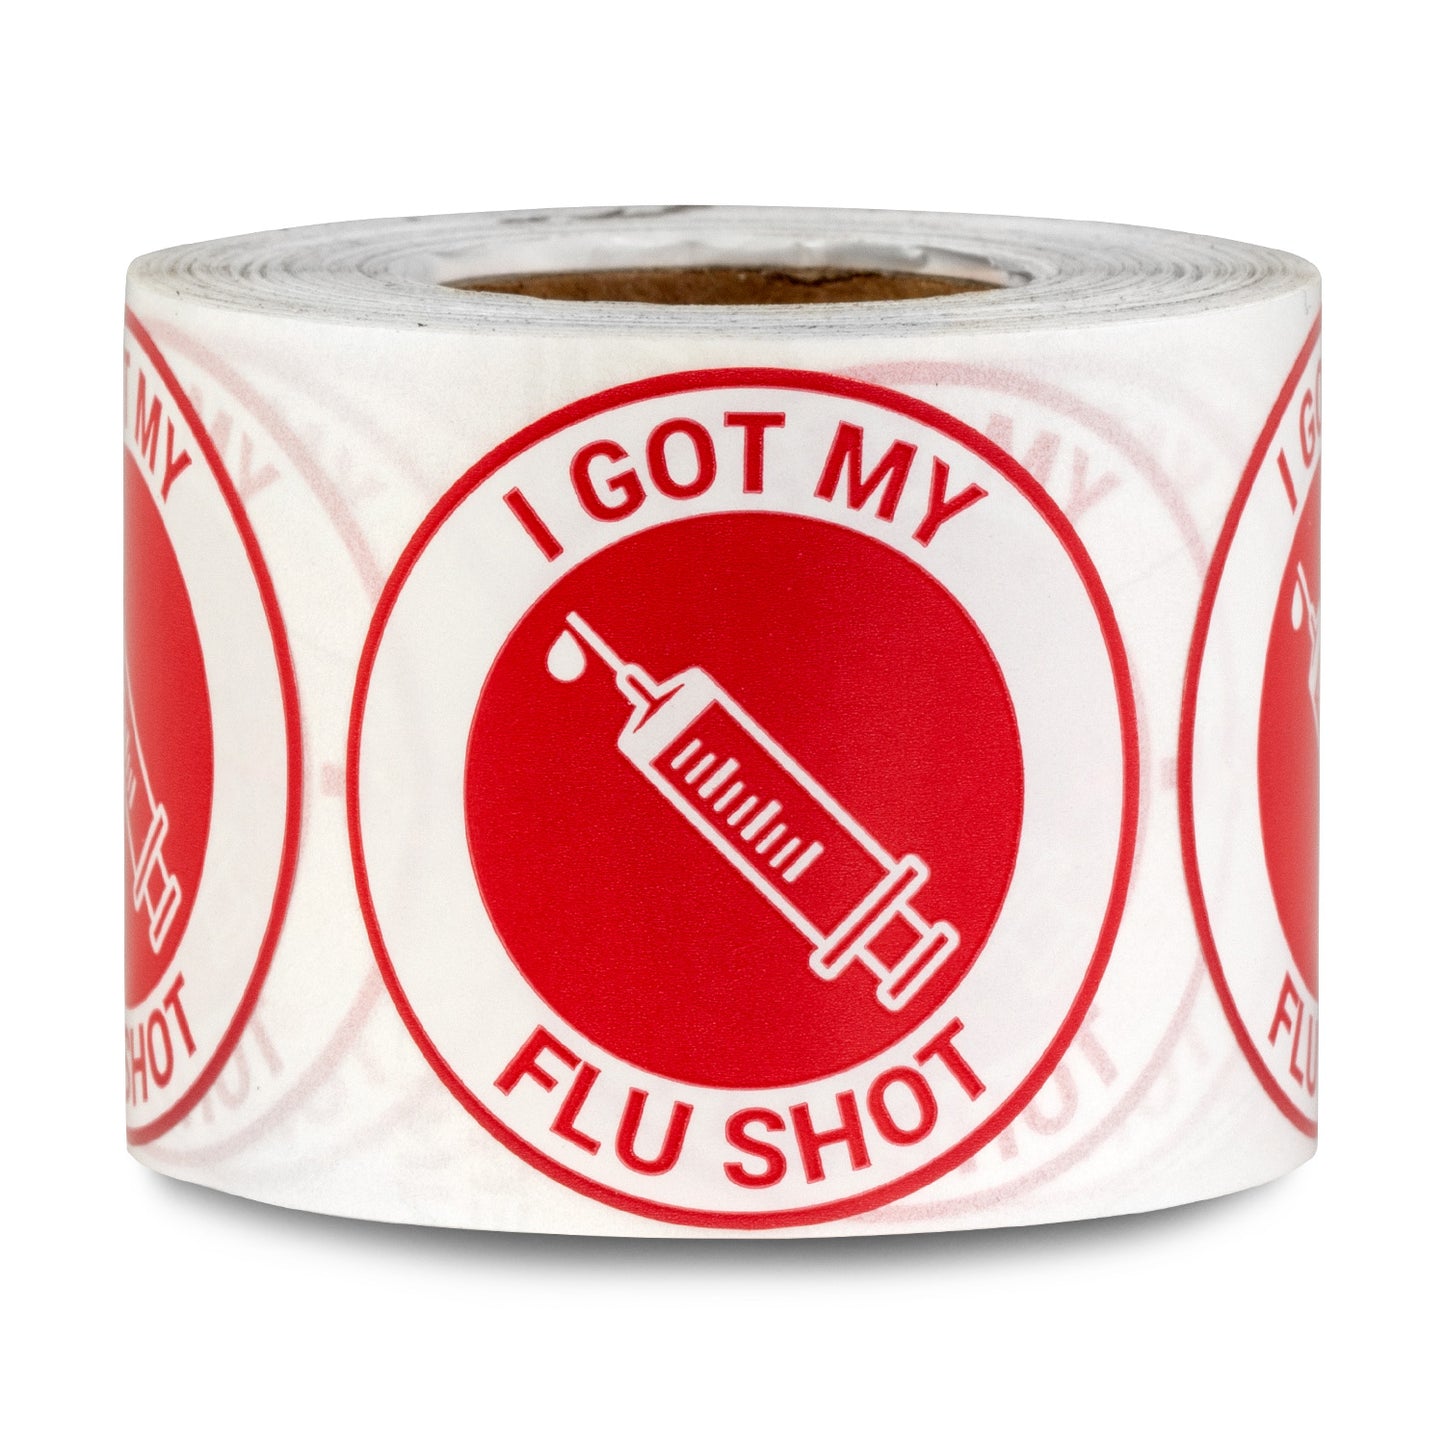 1.5 inch | Warning! I Got My Flu Shot Stickers